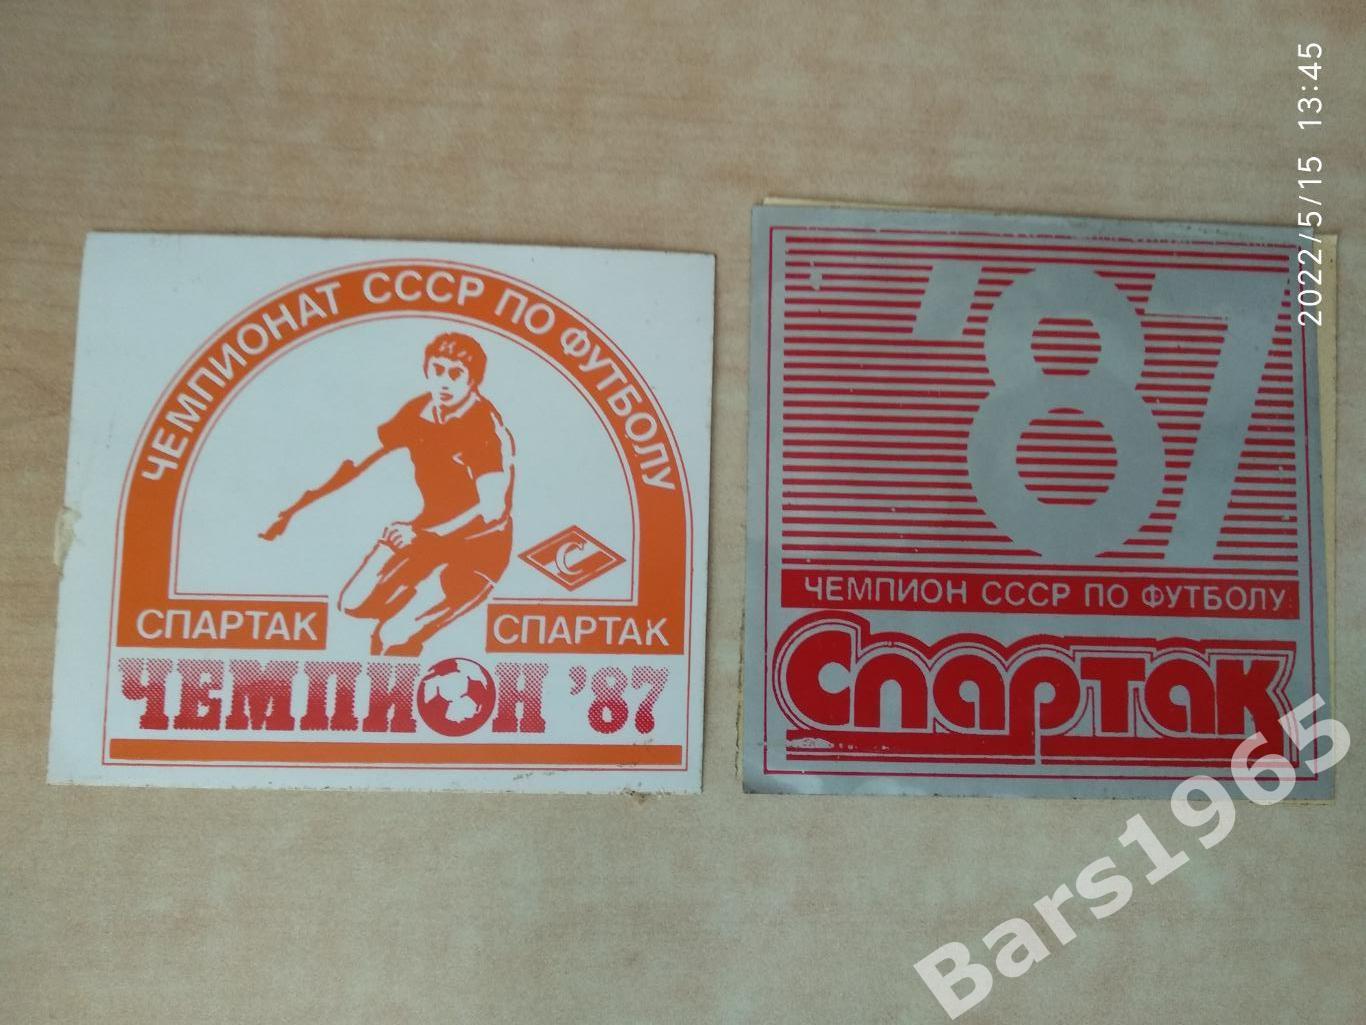 Спартак Москва - чемпион СССР по футболу 1987